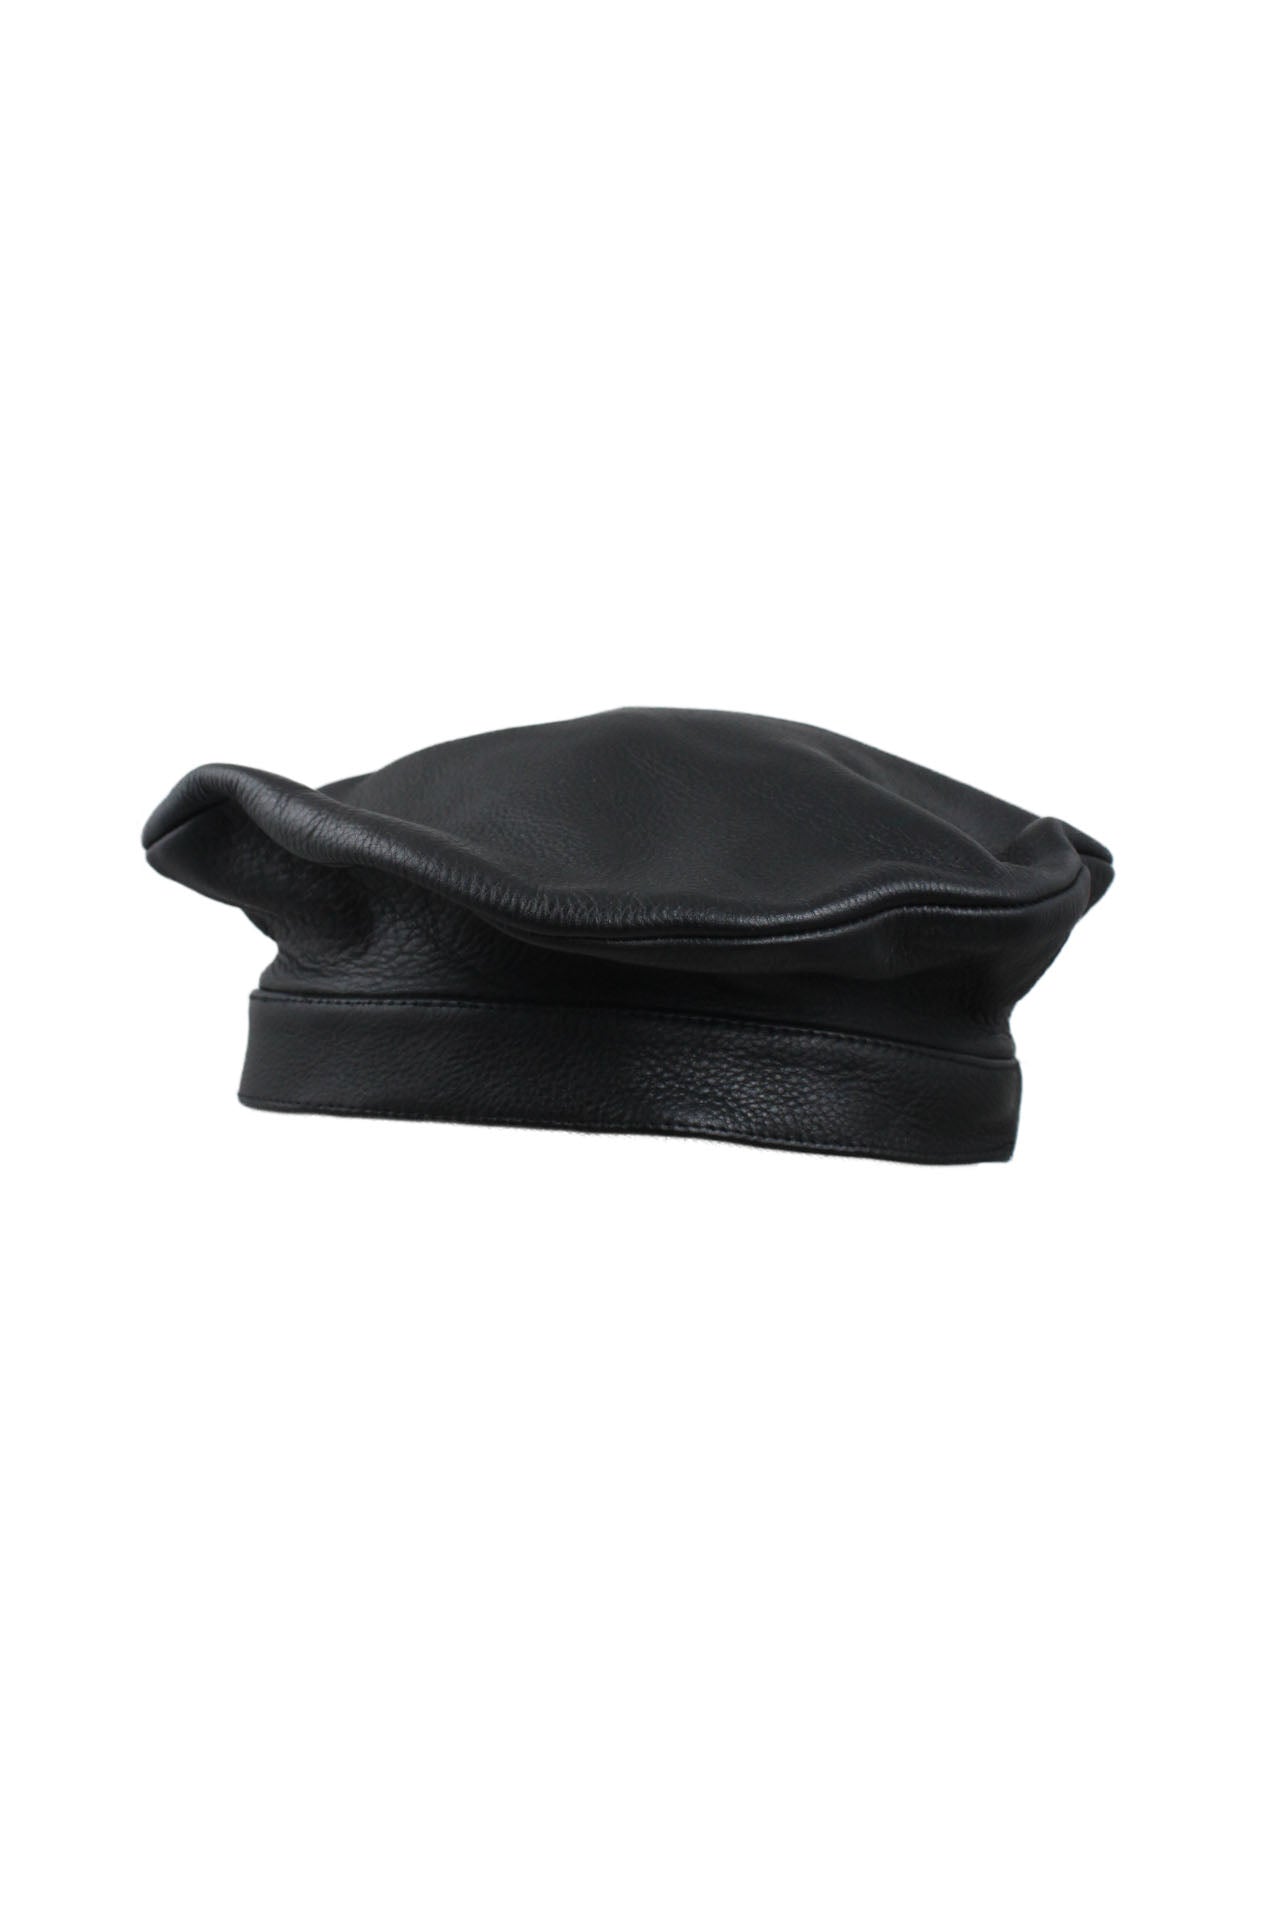 profile of black leather beret hat